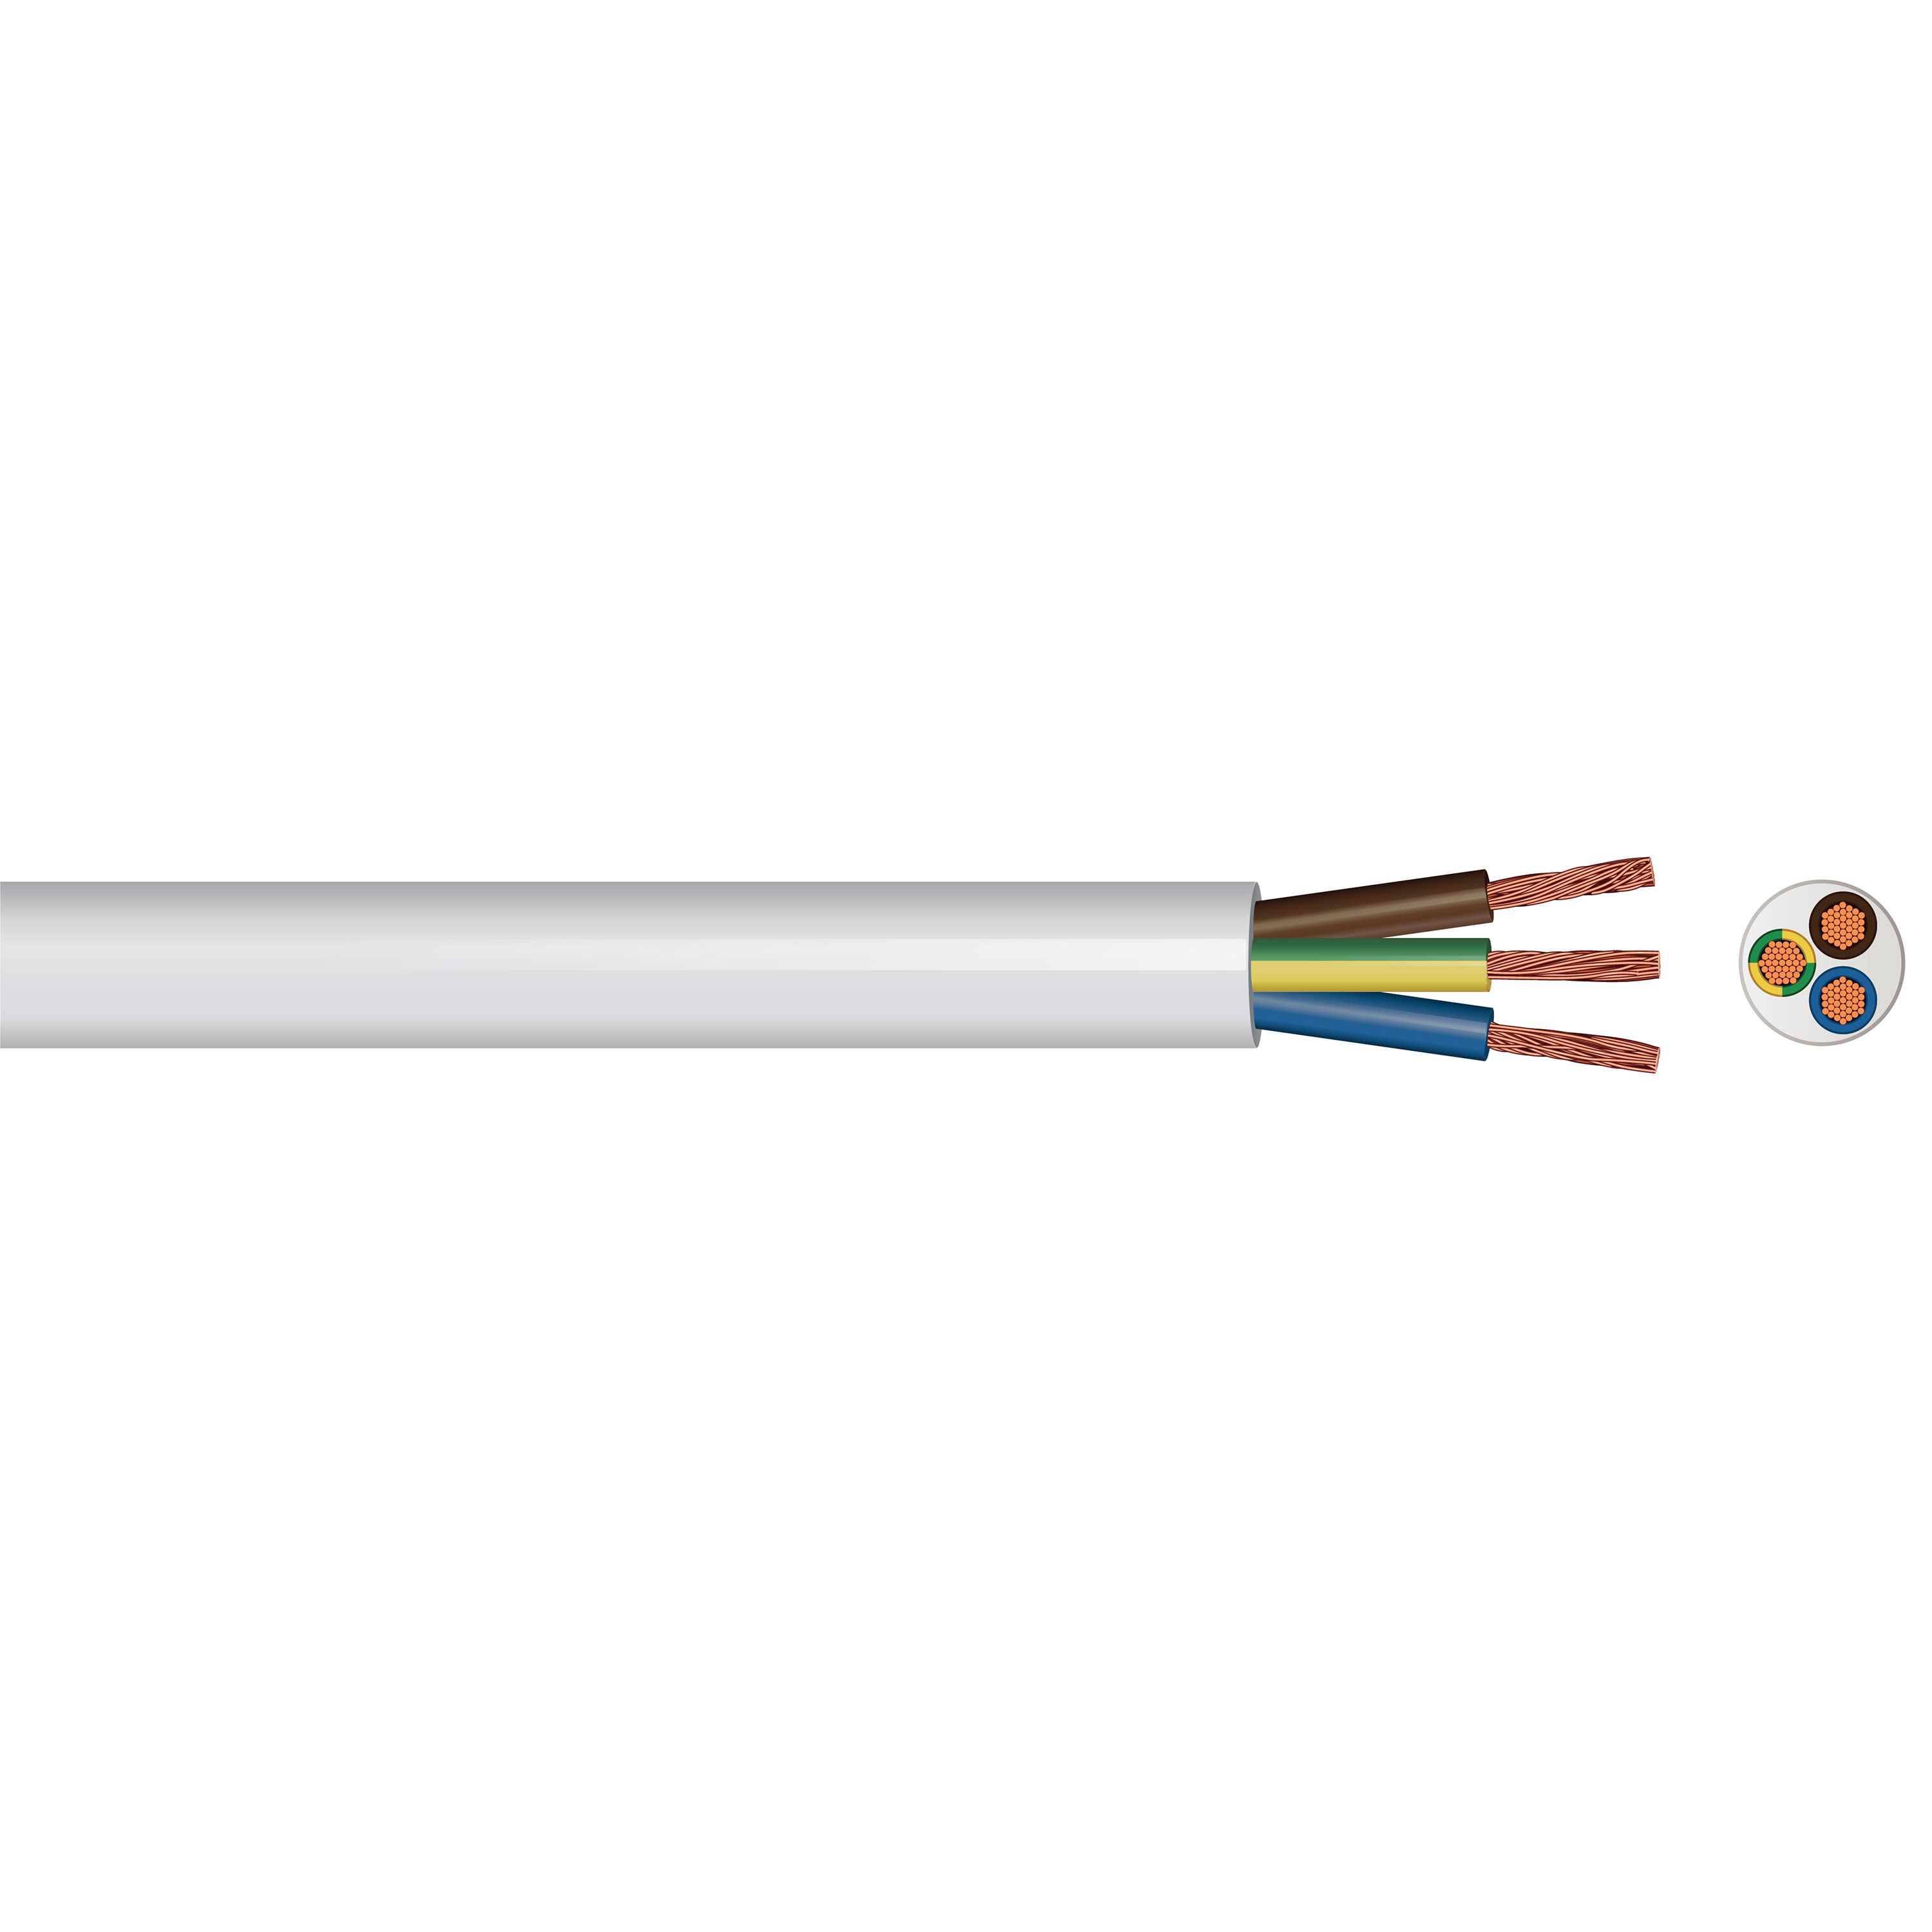 Time White Heat resistant 3-core Flexible Cable 0.75mm² x 5m